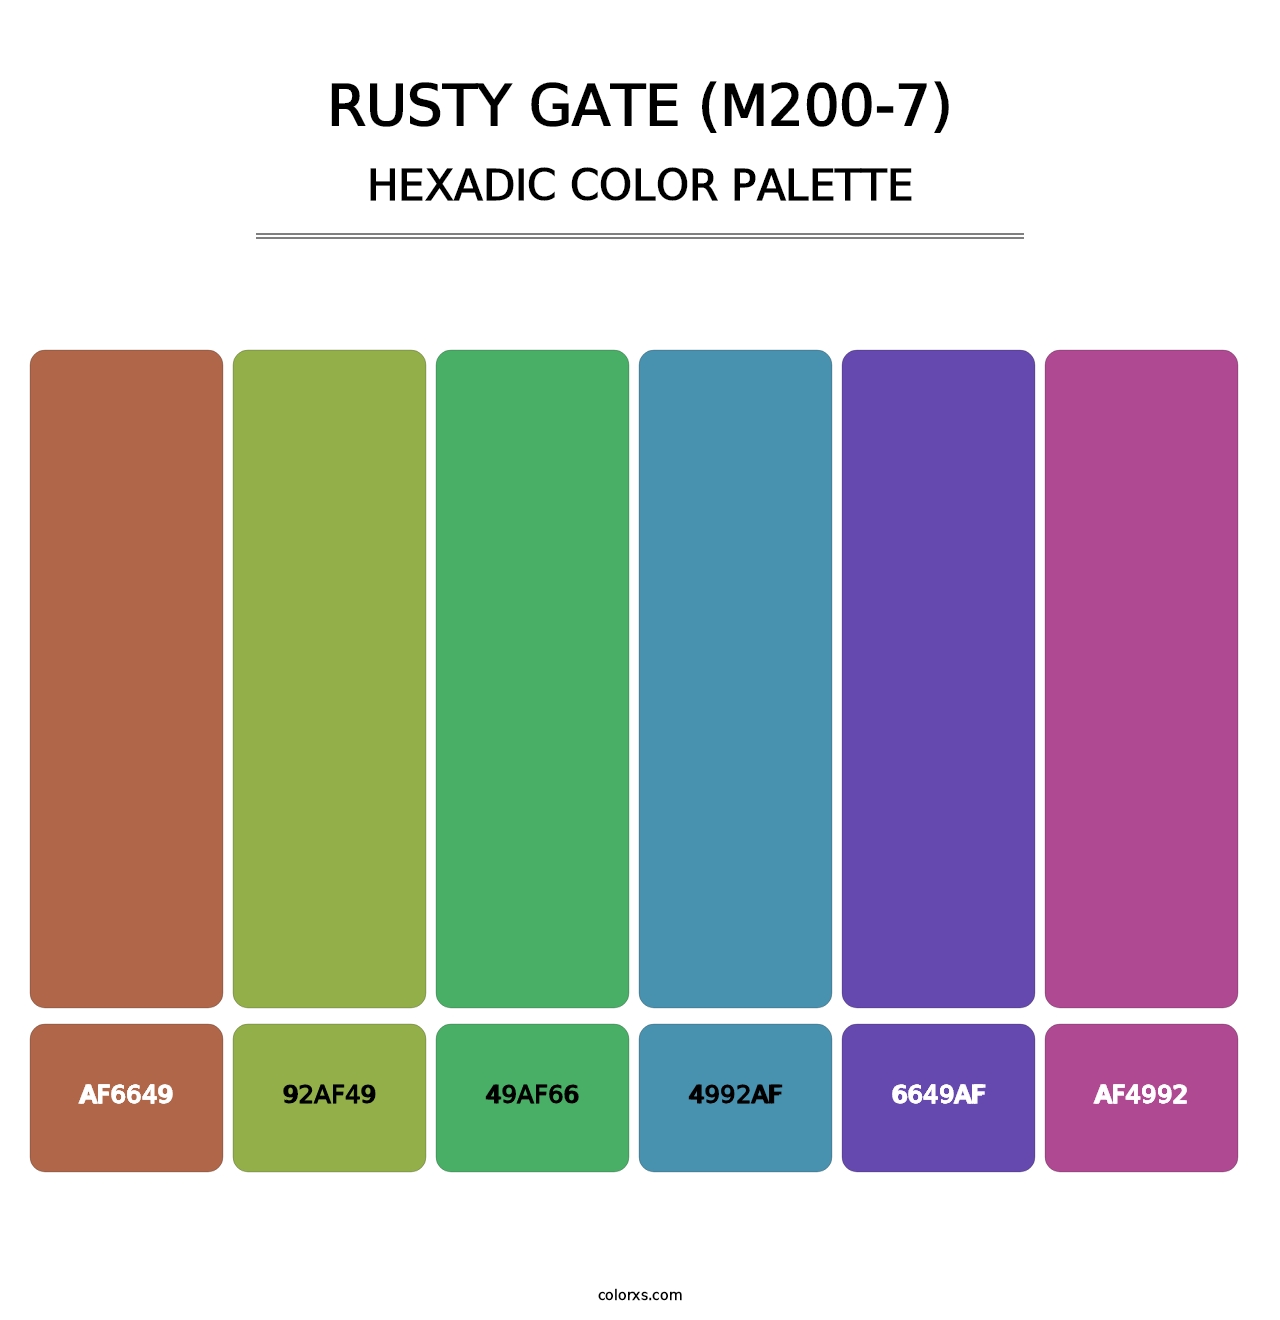 Rusty Gate (M200-7) - Hexadic Color Palette